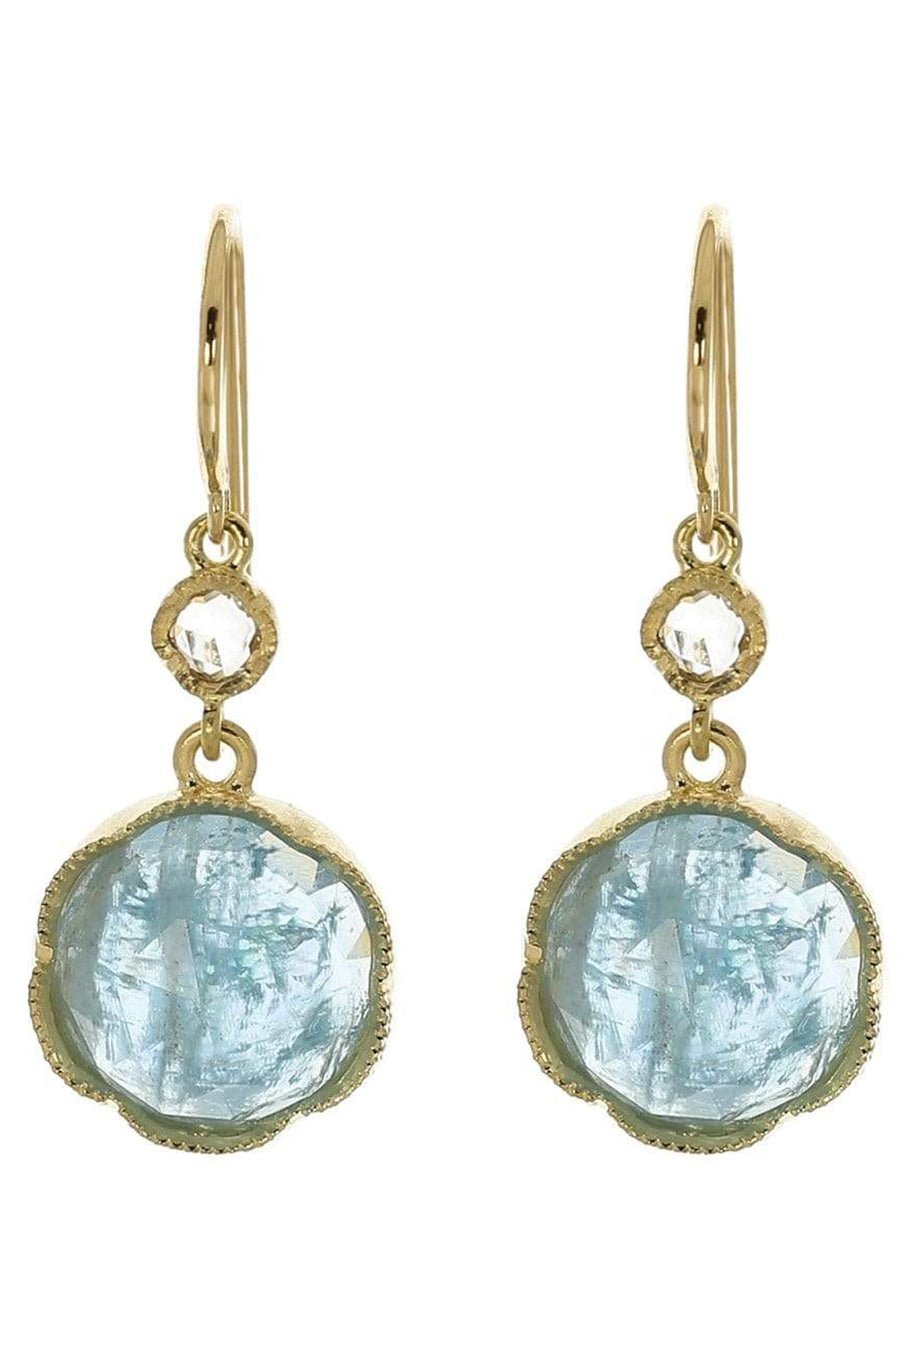 IRENE NEUWIRTH JEWELRY-Aquamarine and Diamond Drop Earrings-YELLOW GOLD